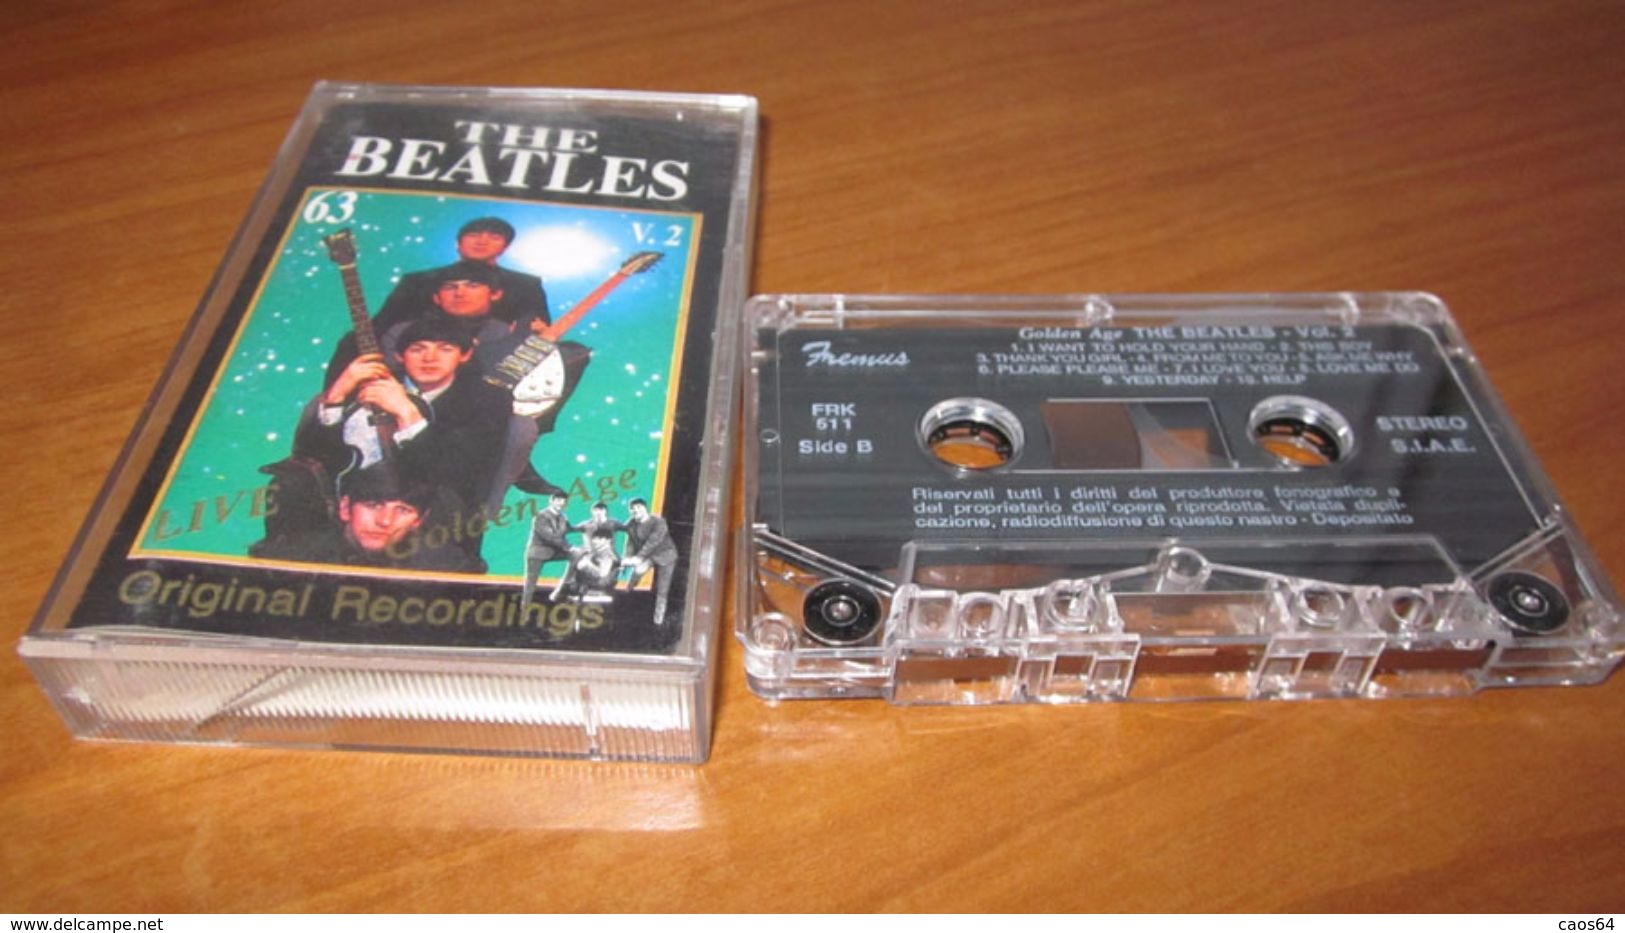 BEATLES GOLDEN AGE VOL. 2 FRK 511 MC - Cassette